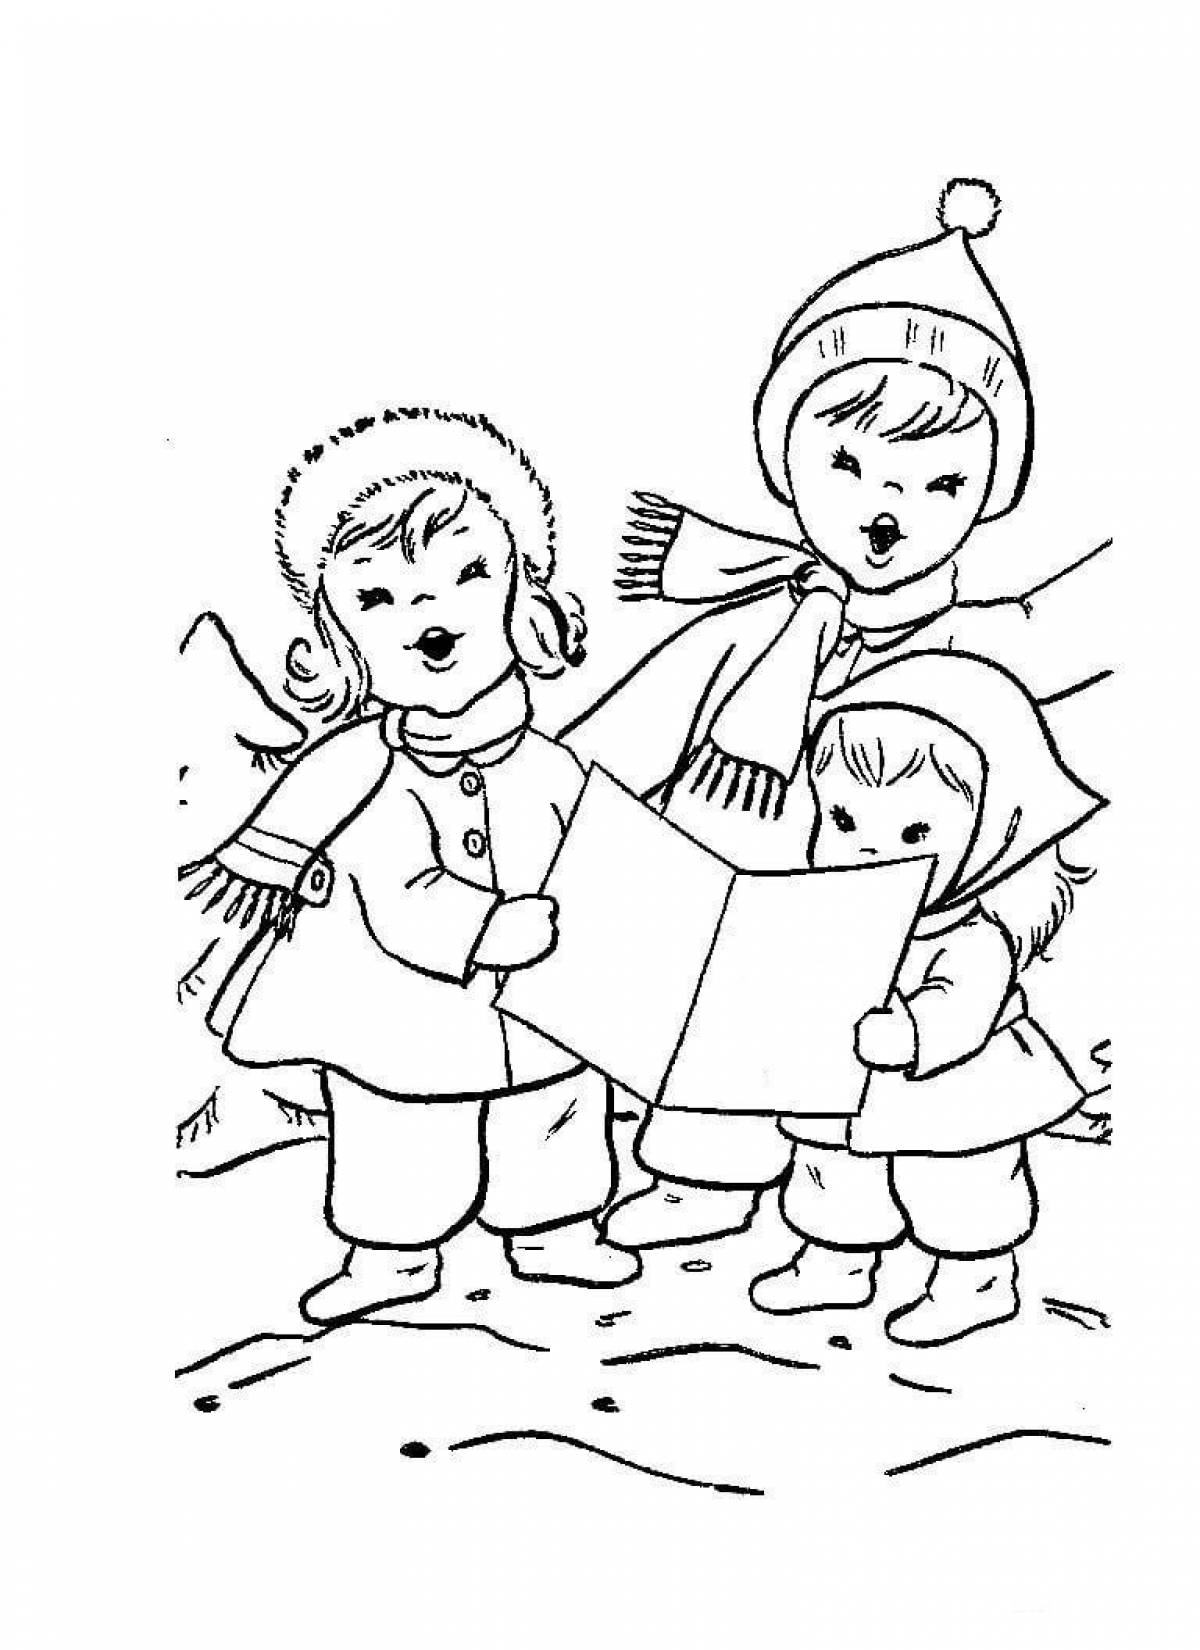 Color-zany carol coloring page для детей 6-7 лет